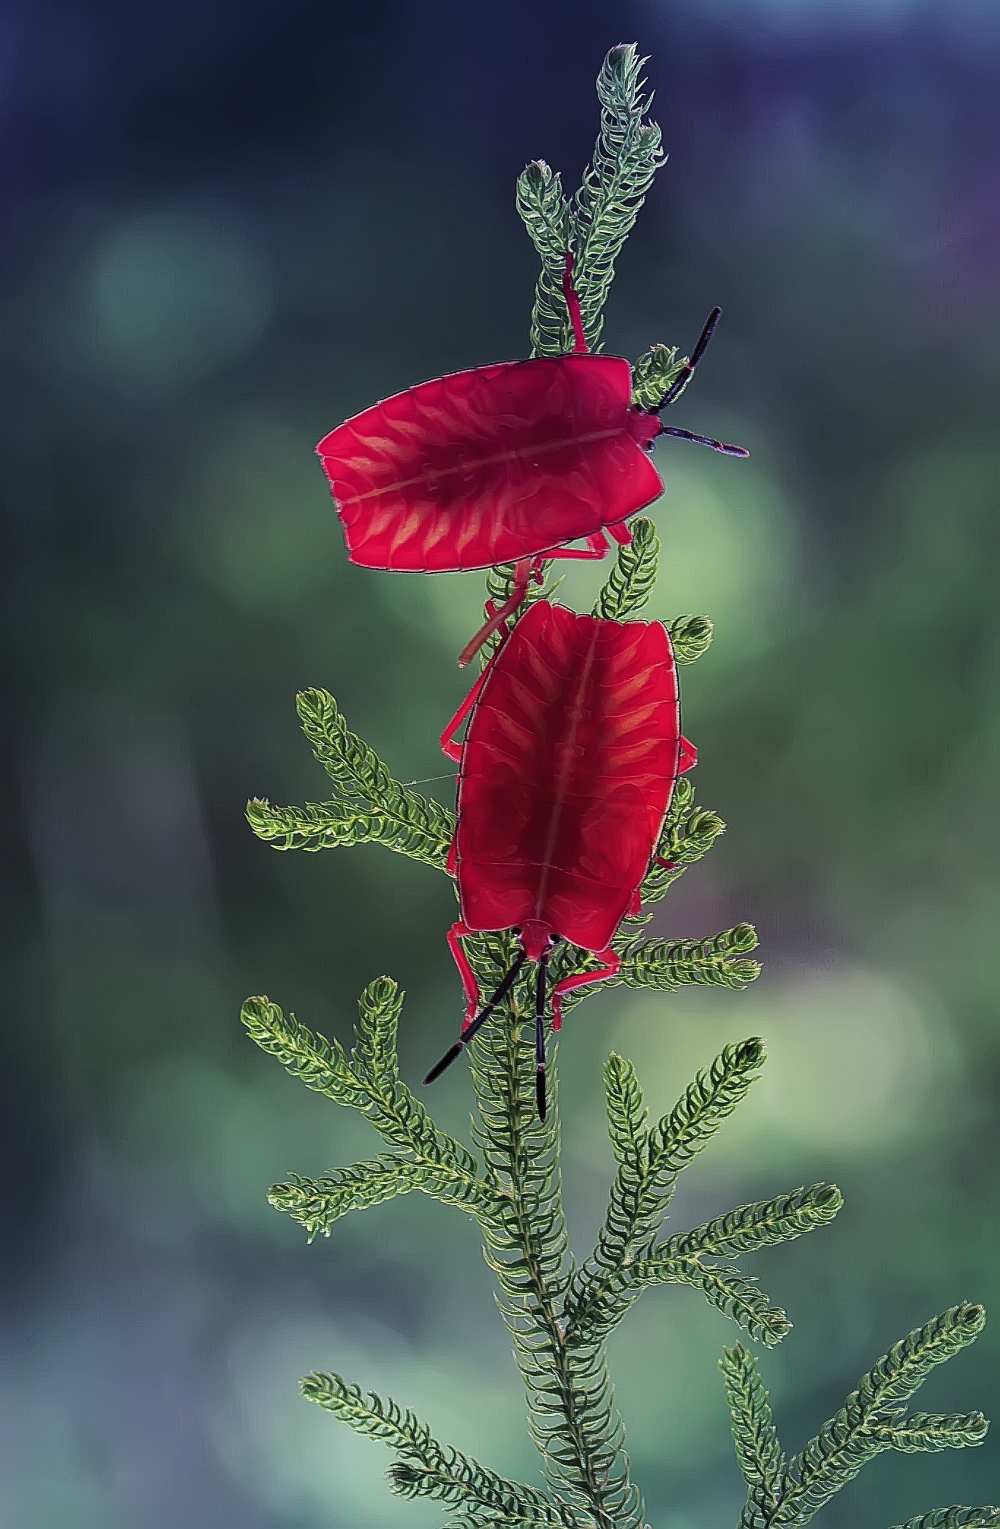 Red Ladybug from Abdul Gapur Dayak